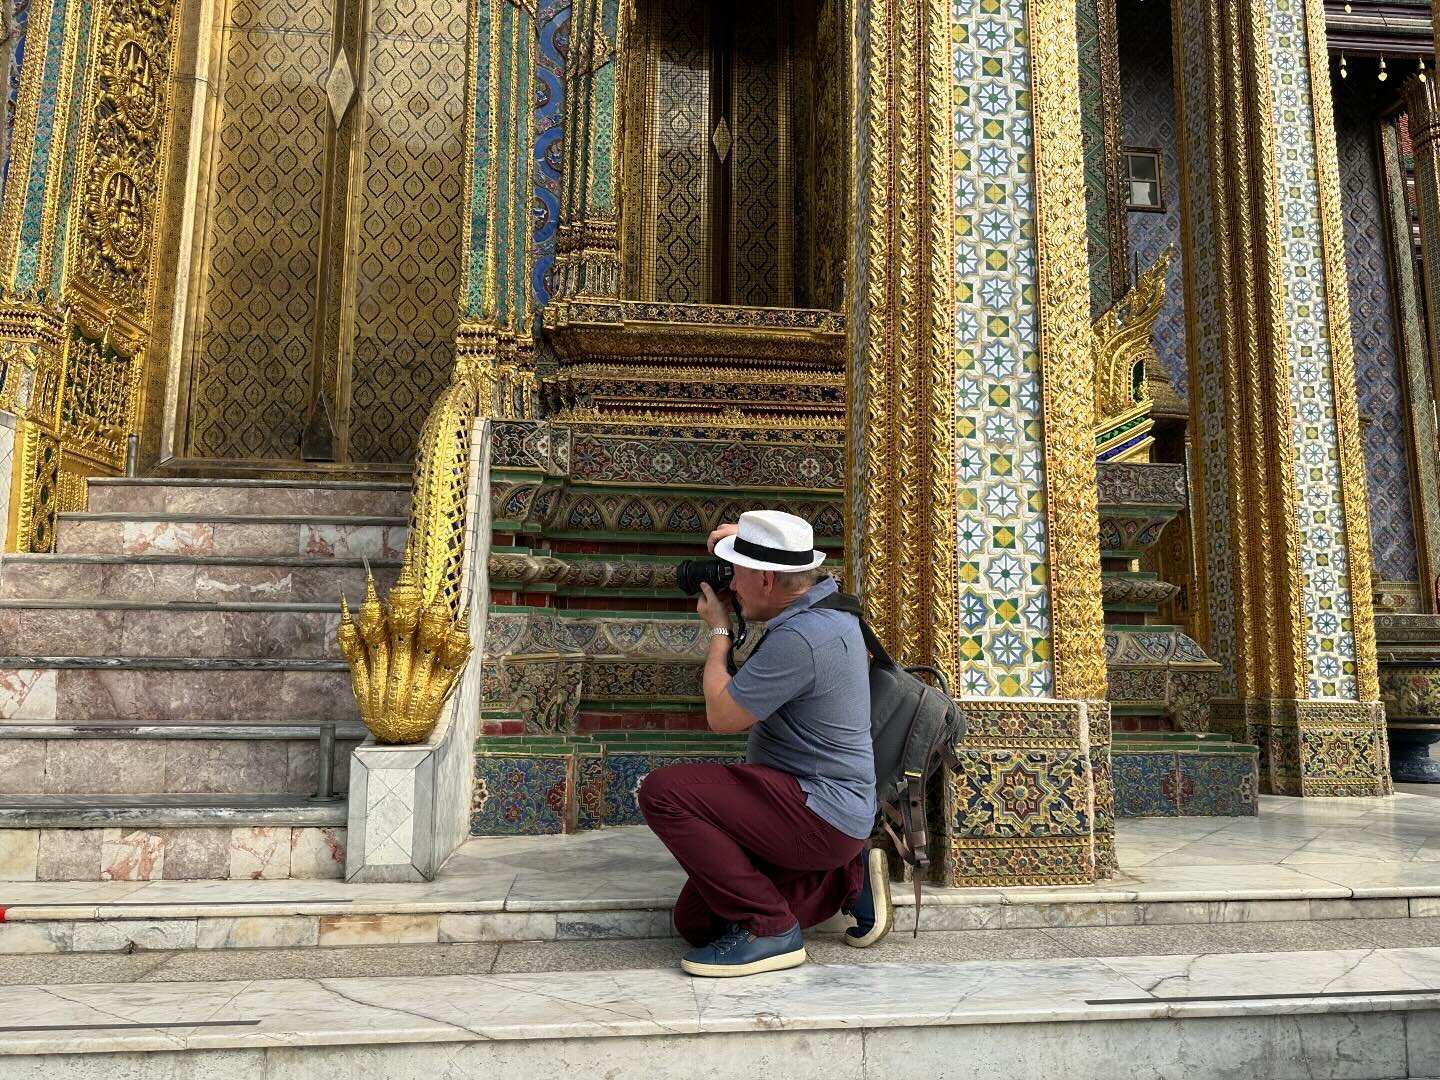 Travel as creative inspiration. Here&rsquo;s Steve in the Grand Palace in Bangkok.  #creativetravelphotos #devotedphotographer #